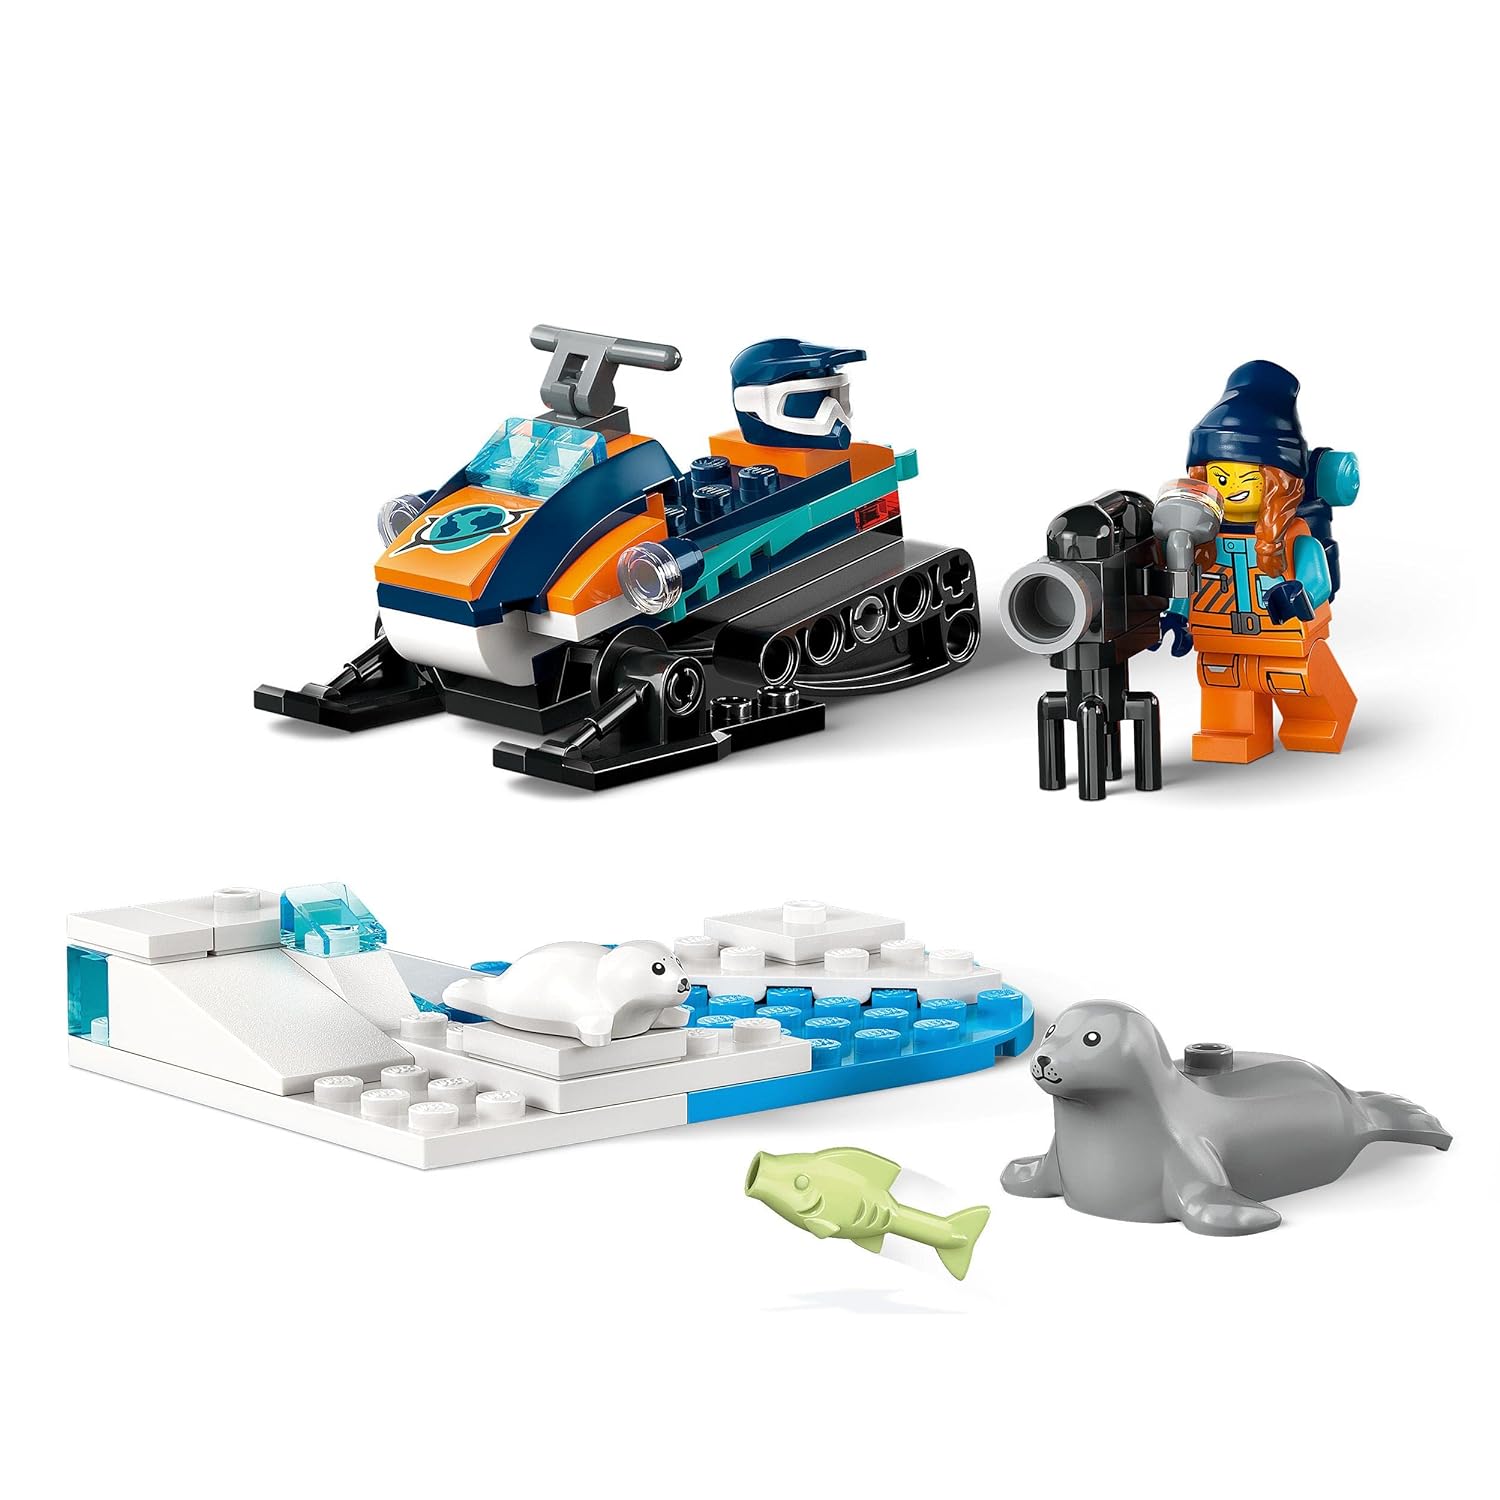 LEGO City Arctic Explorer Snowmobile Building Kit for Ages 5+